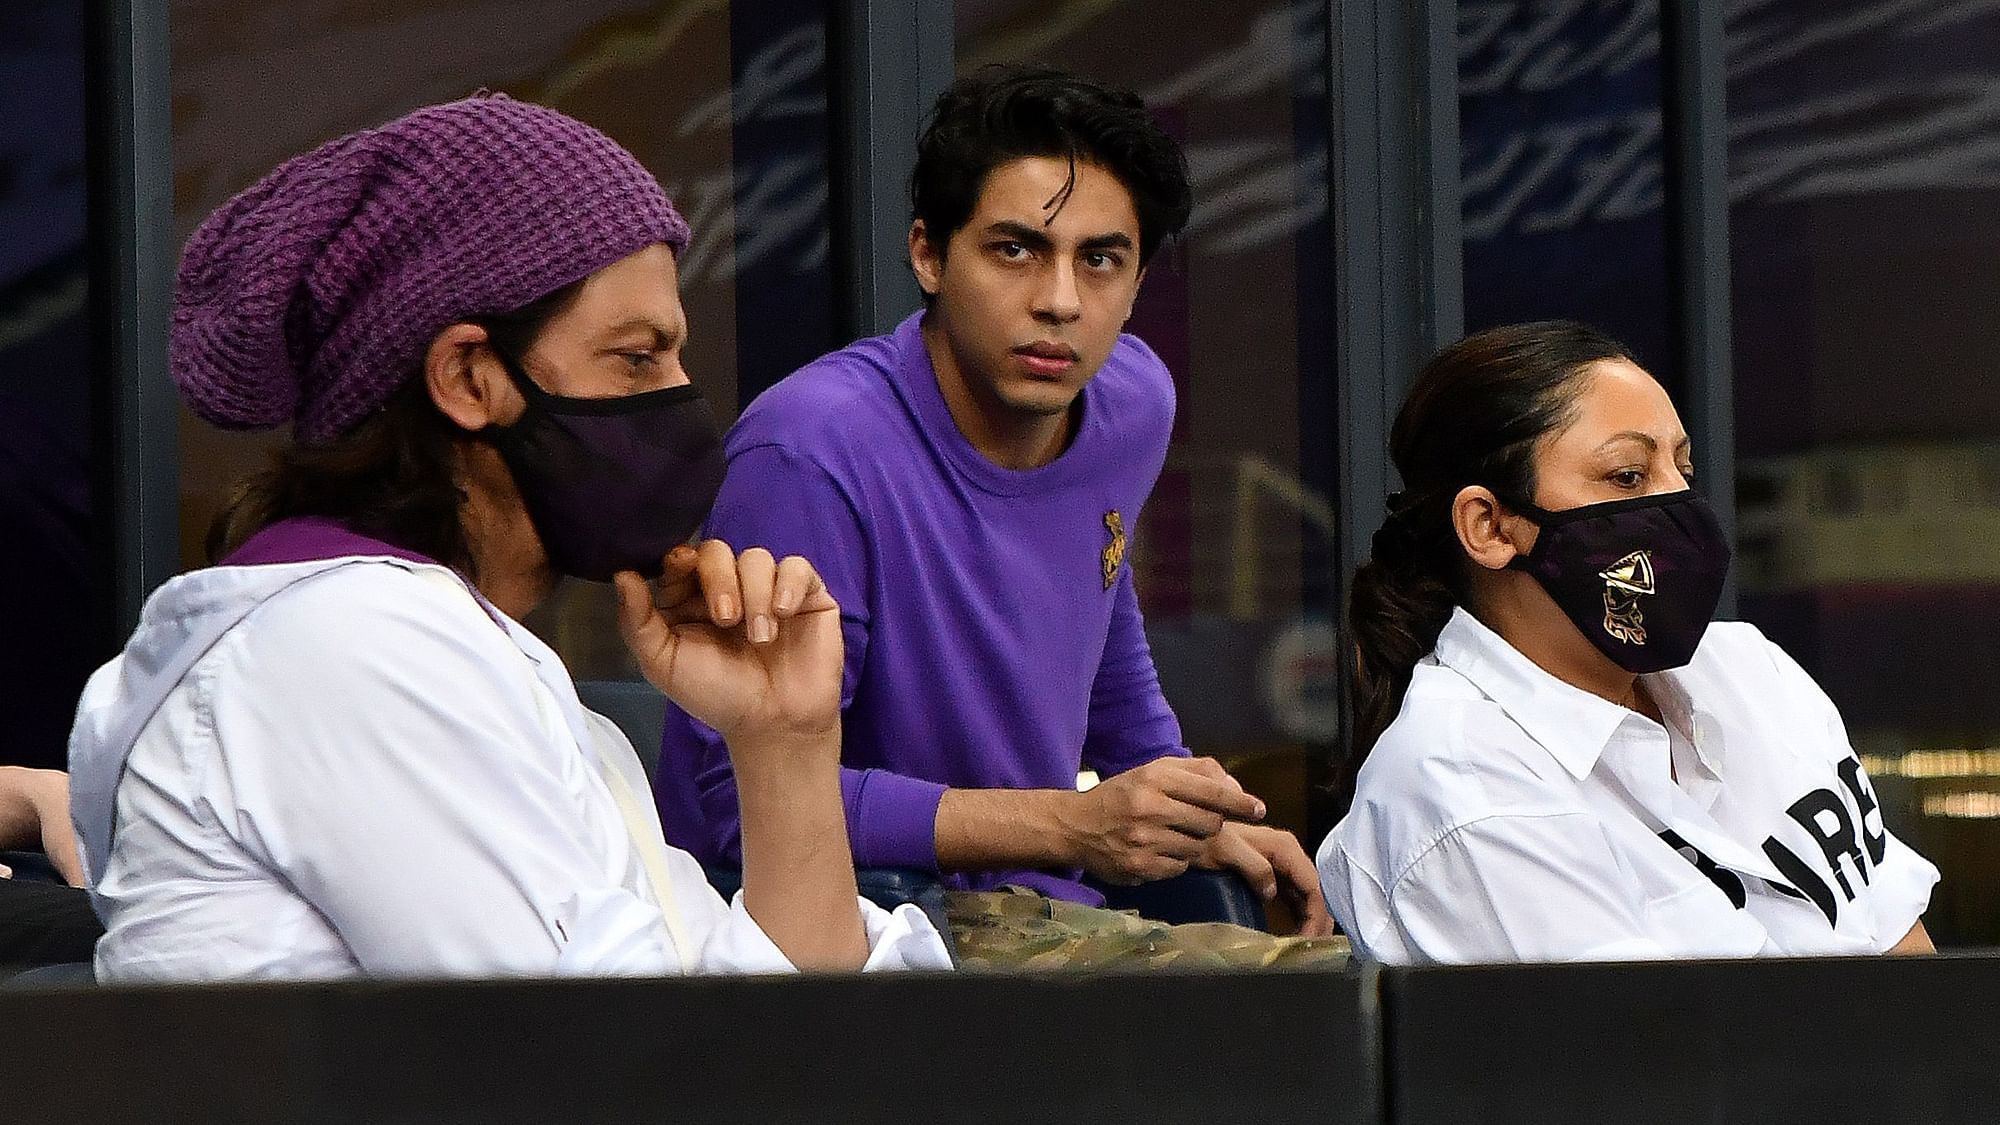 Shahrukh Khan was spotted watching the KKR vs RR match at the Dubai International Cricket Stadium.